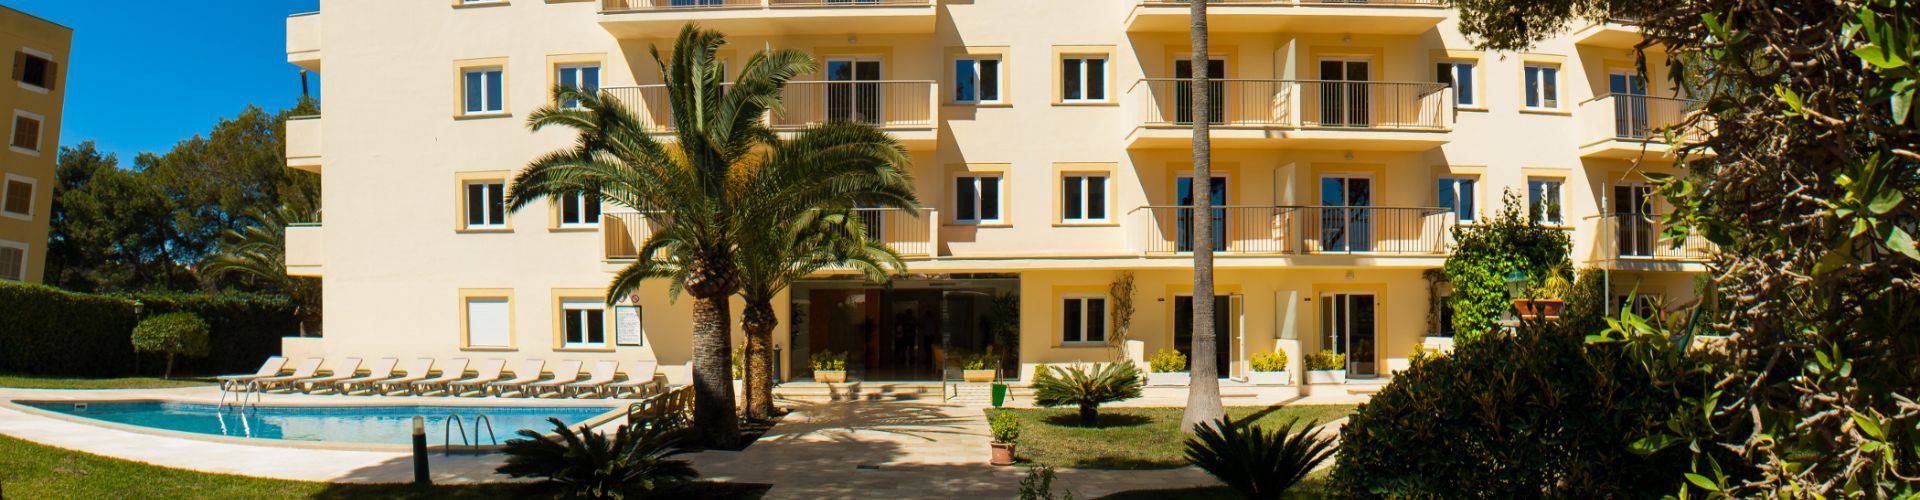 Cabot Hotels - Playa de Palma - 